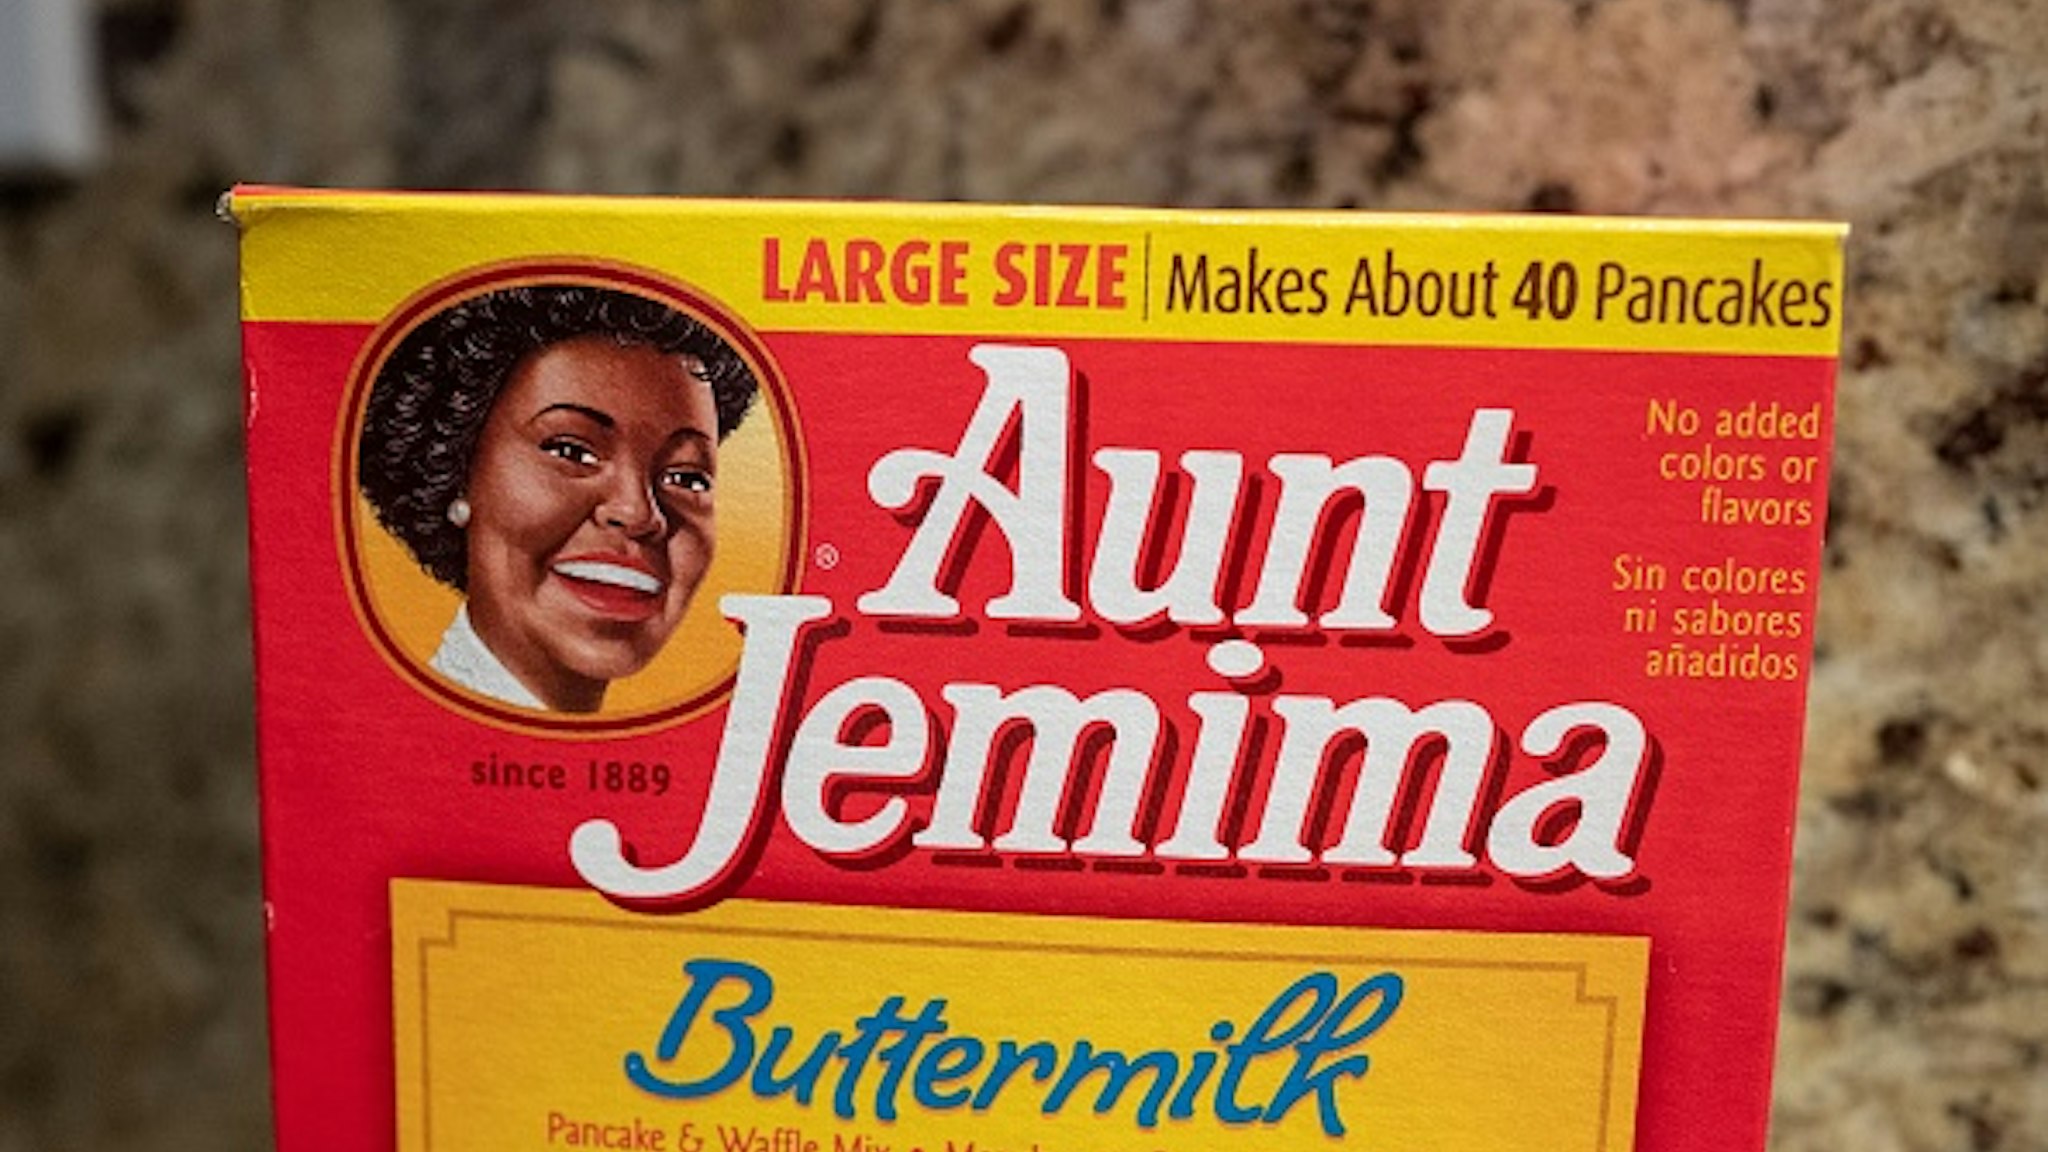 Close-up of Aunt Jemima brand buttermilk pancake mix in kitchen setting, San Ramon, California, November 20, 2020.